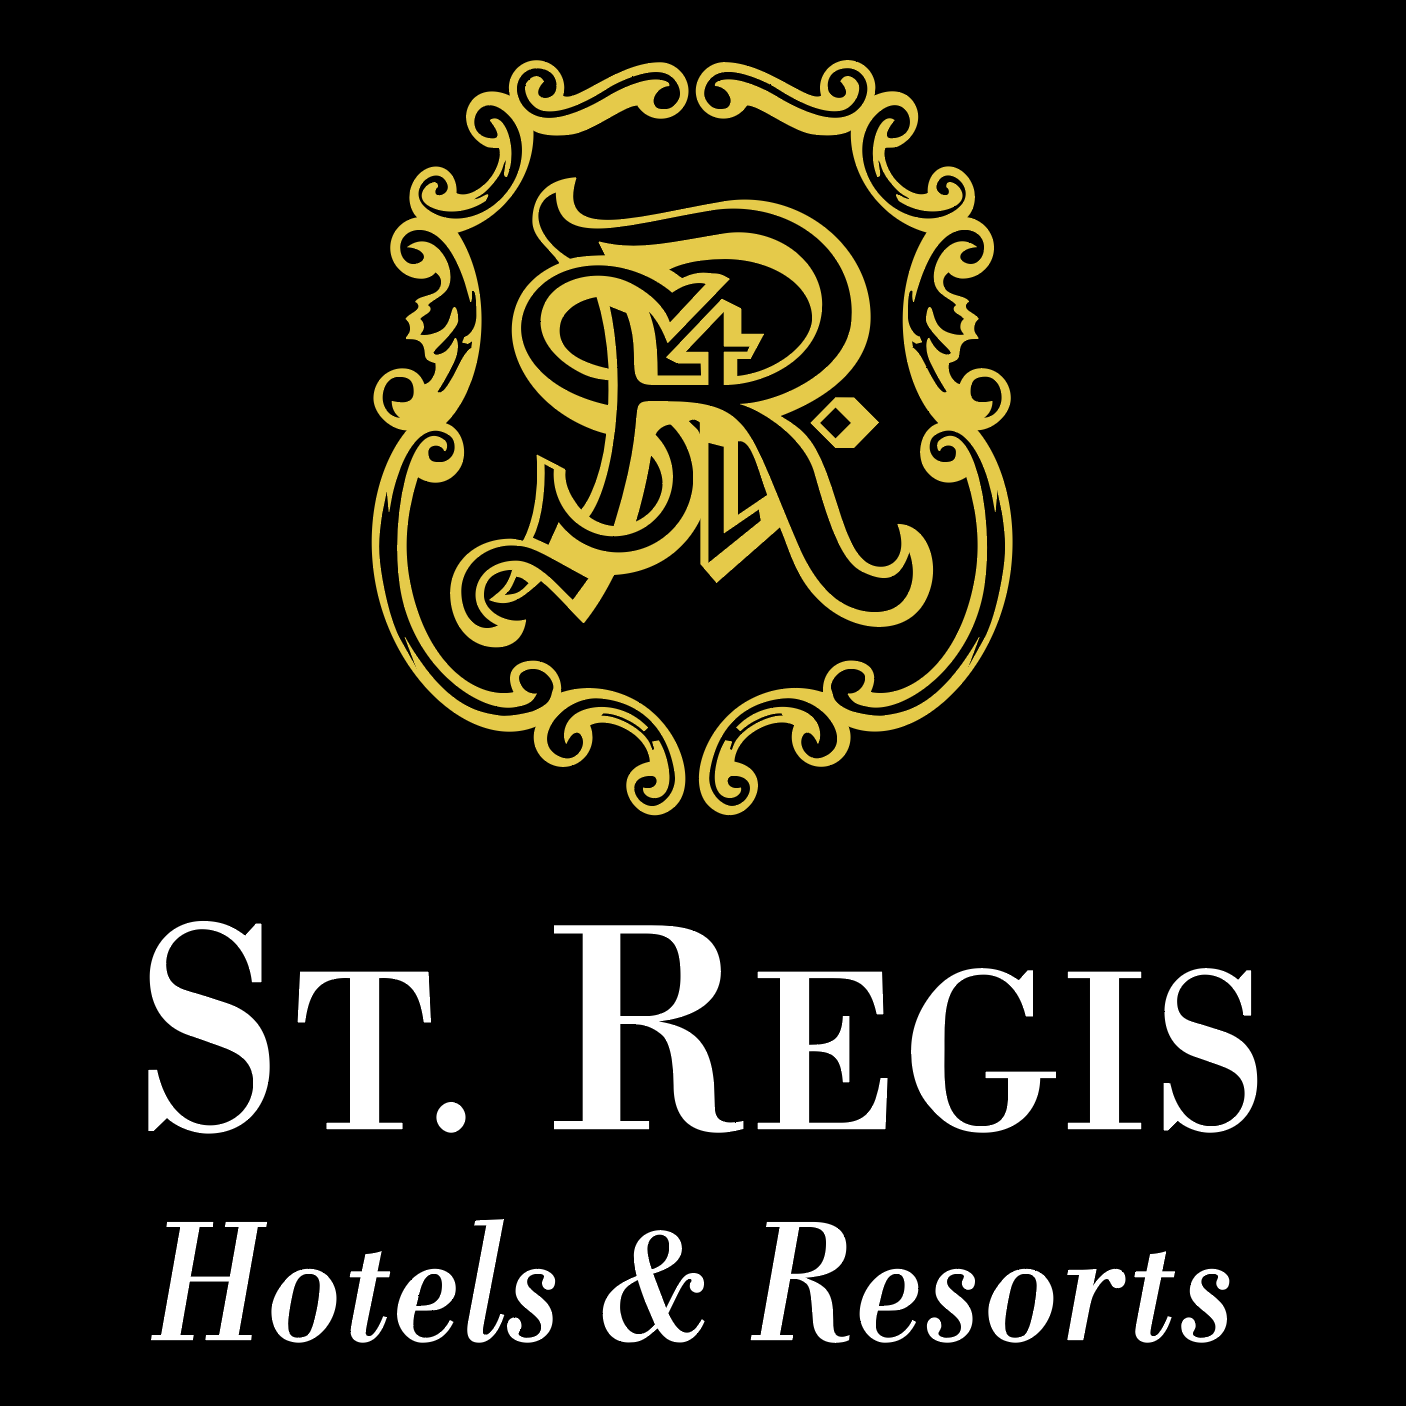 ST. REGIS HOTELS